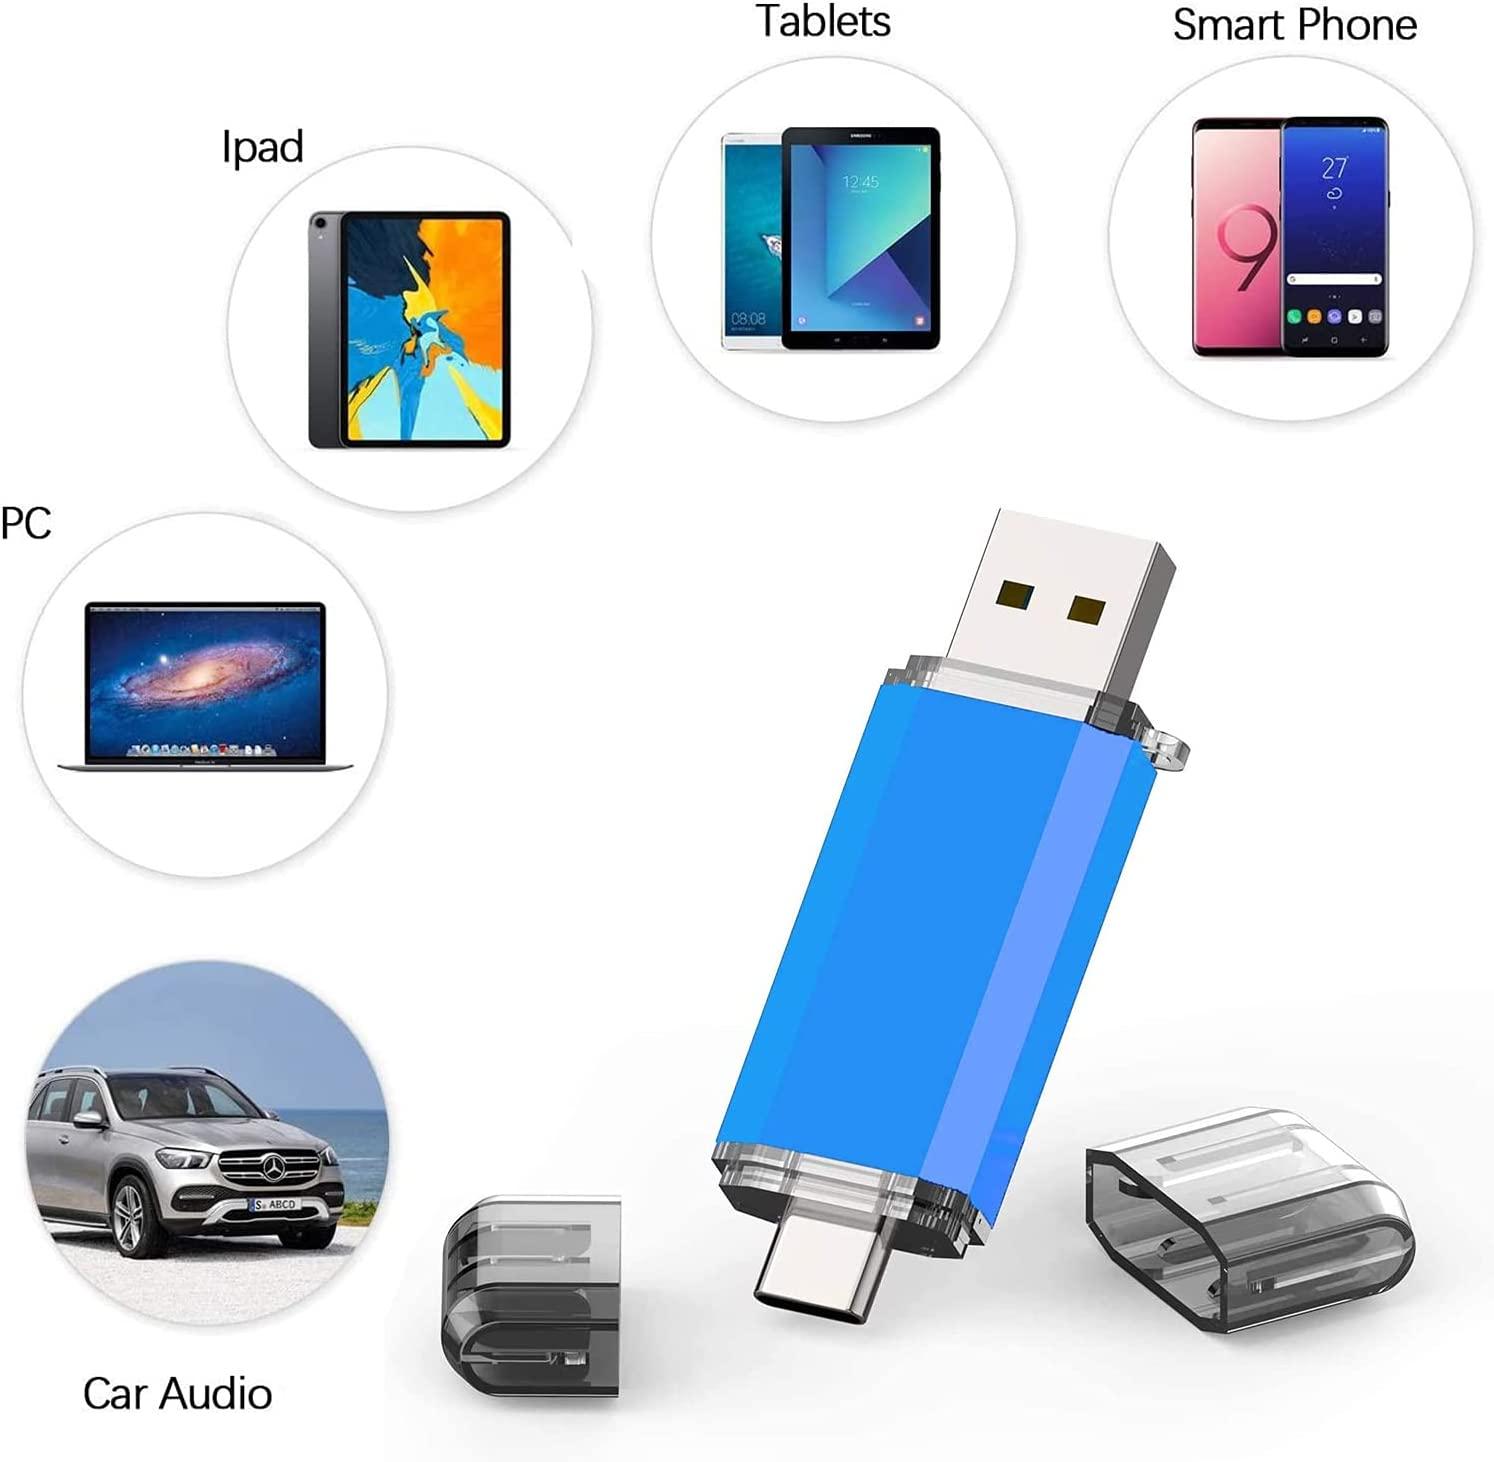 3 en 1 USB Flash Drive Expansión Memory Stick Otg Pendrive para Iphone Ipad  Android PC